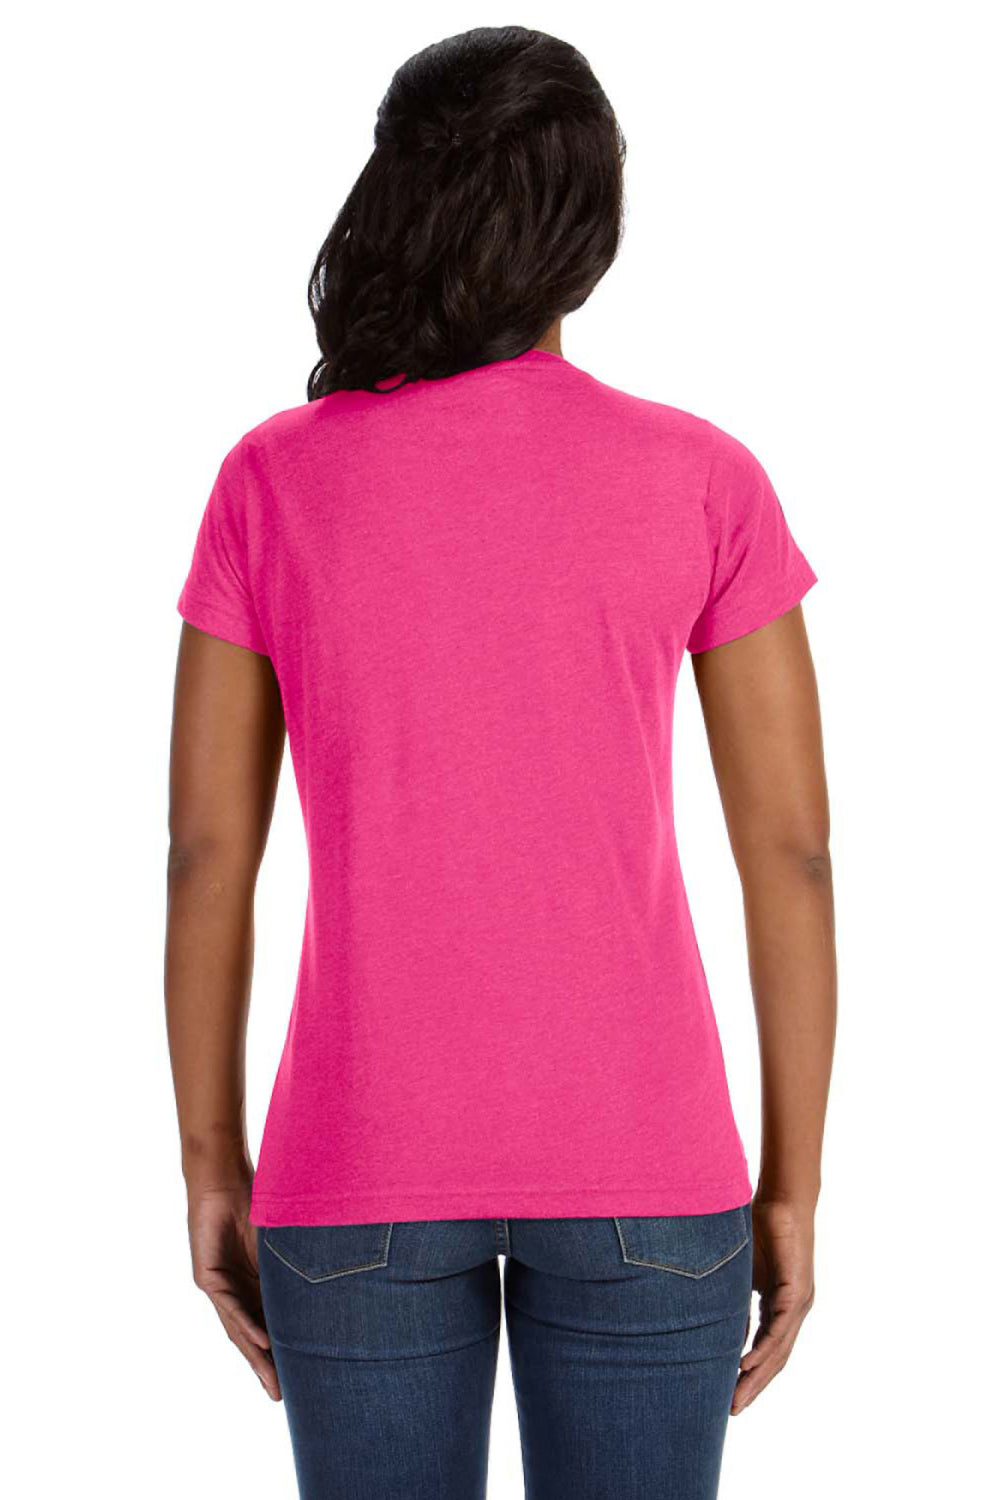 LAT 3516 Fine Jersey Short Sleeve Crewneck T-Shirt Vintage Hot Pink Back